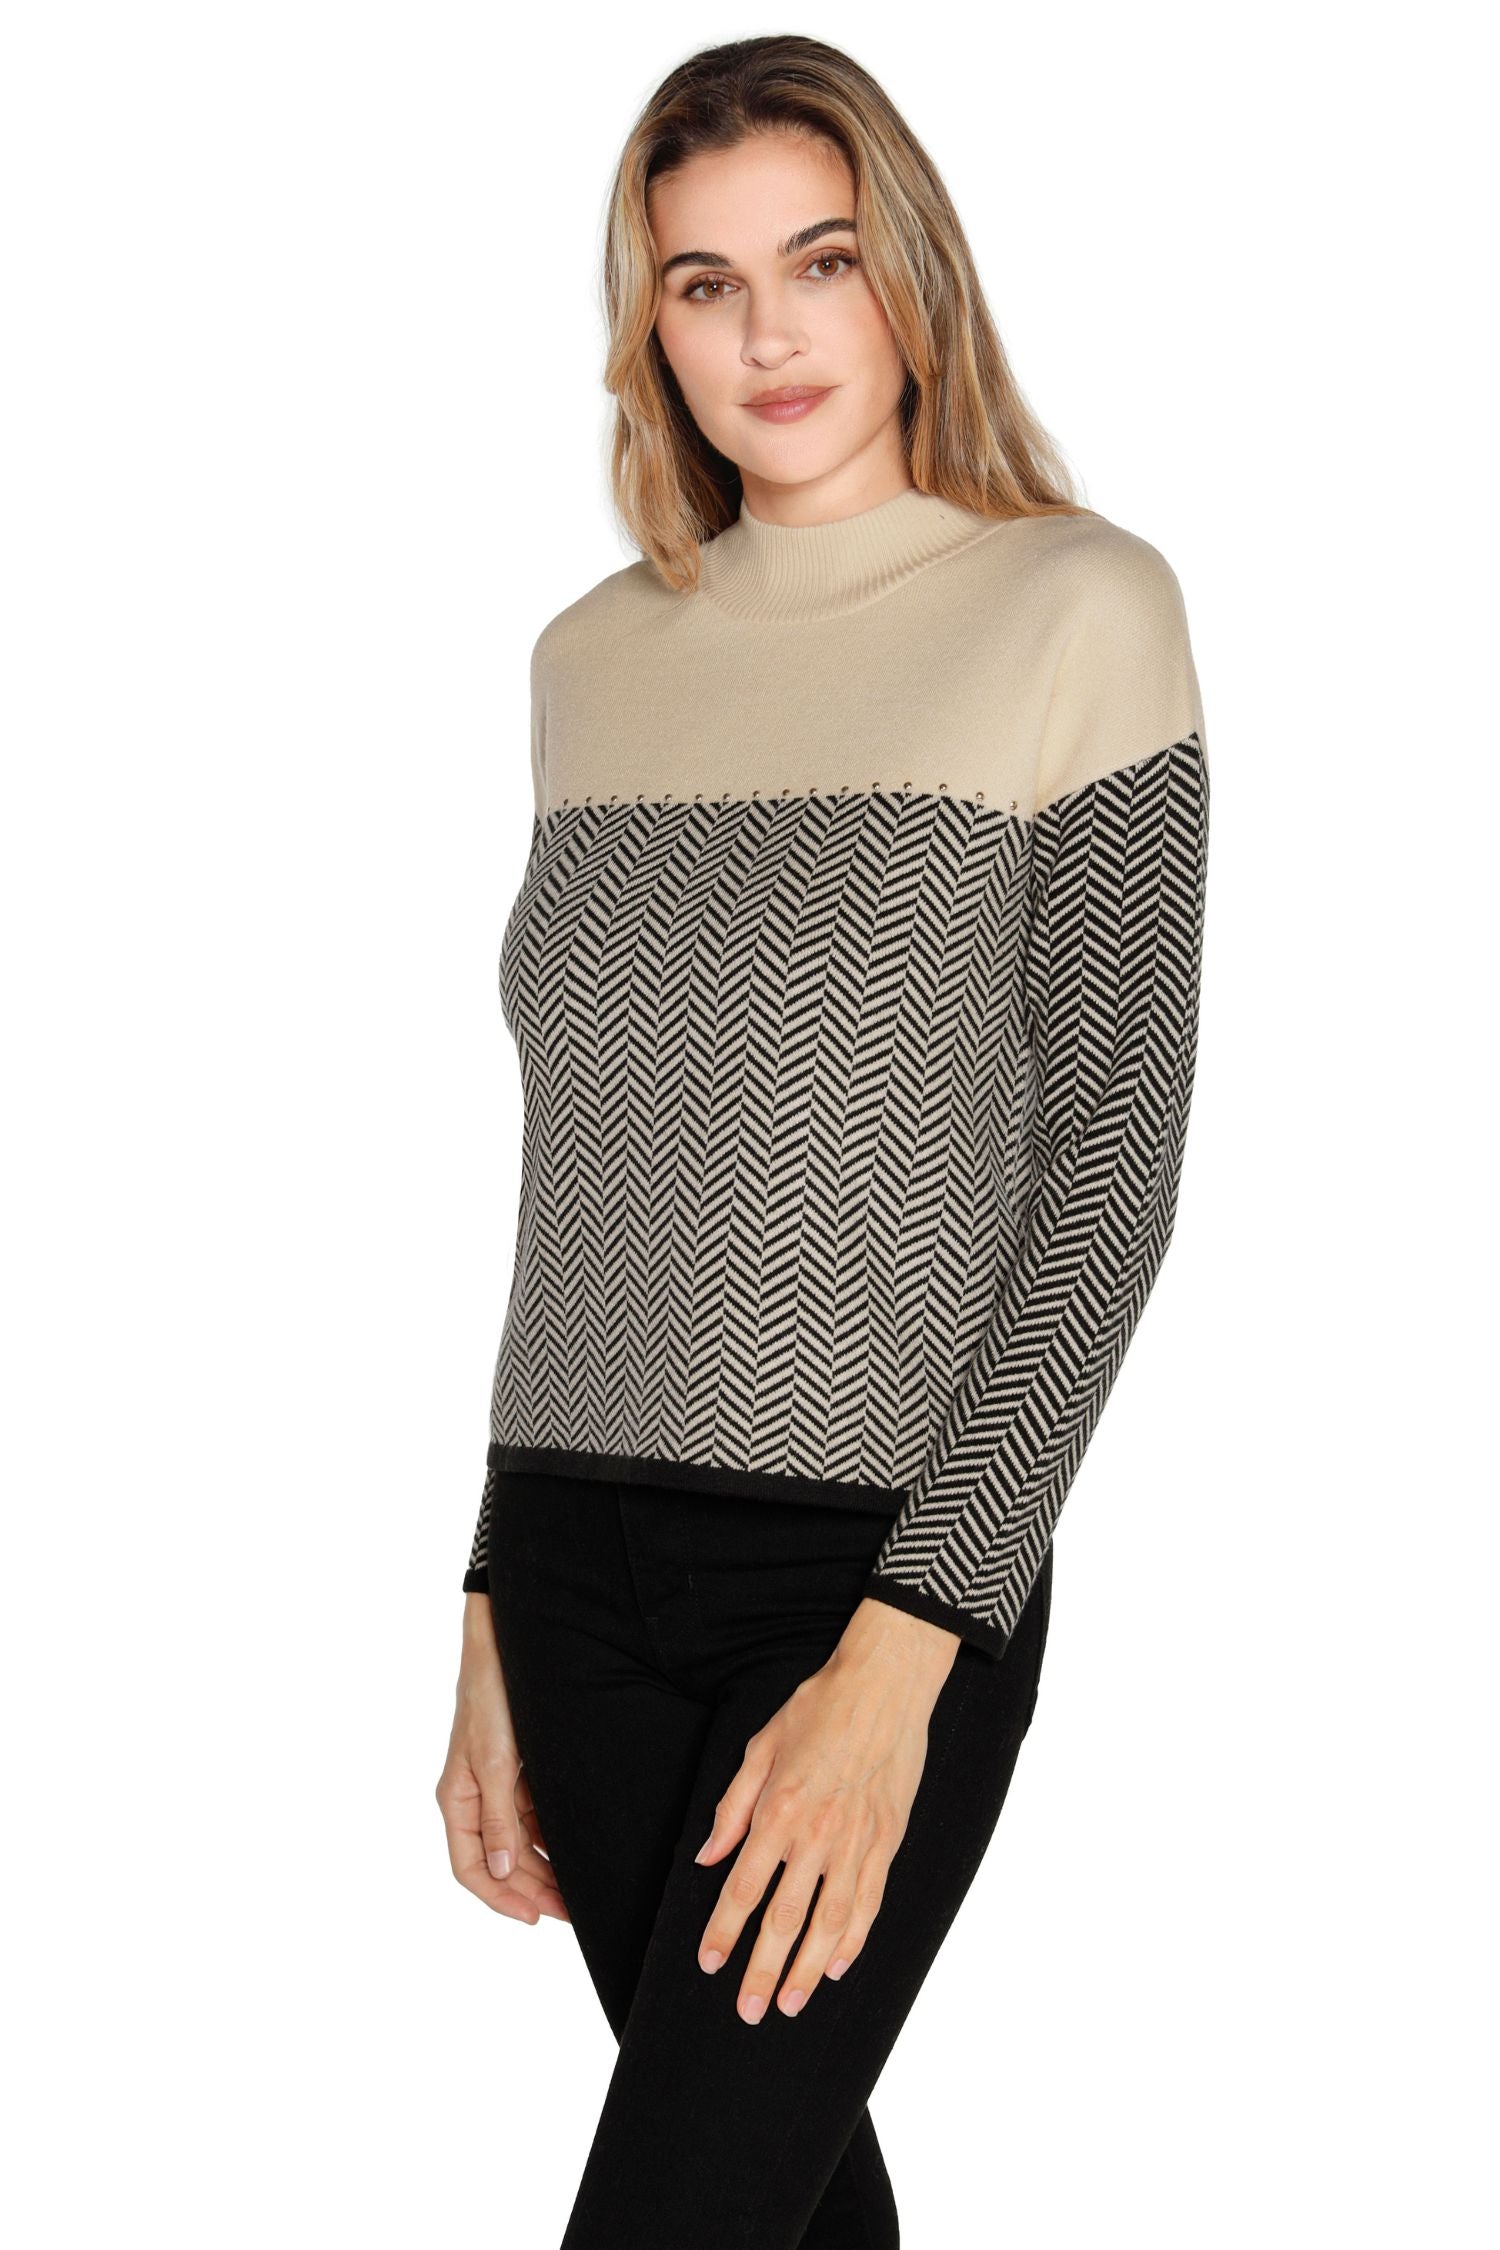 Women's Mock Neck Color Blocked Sweater with Herringbone Knit